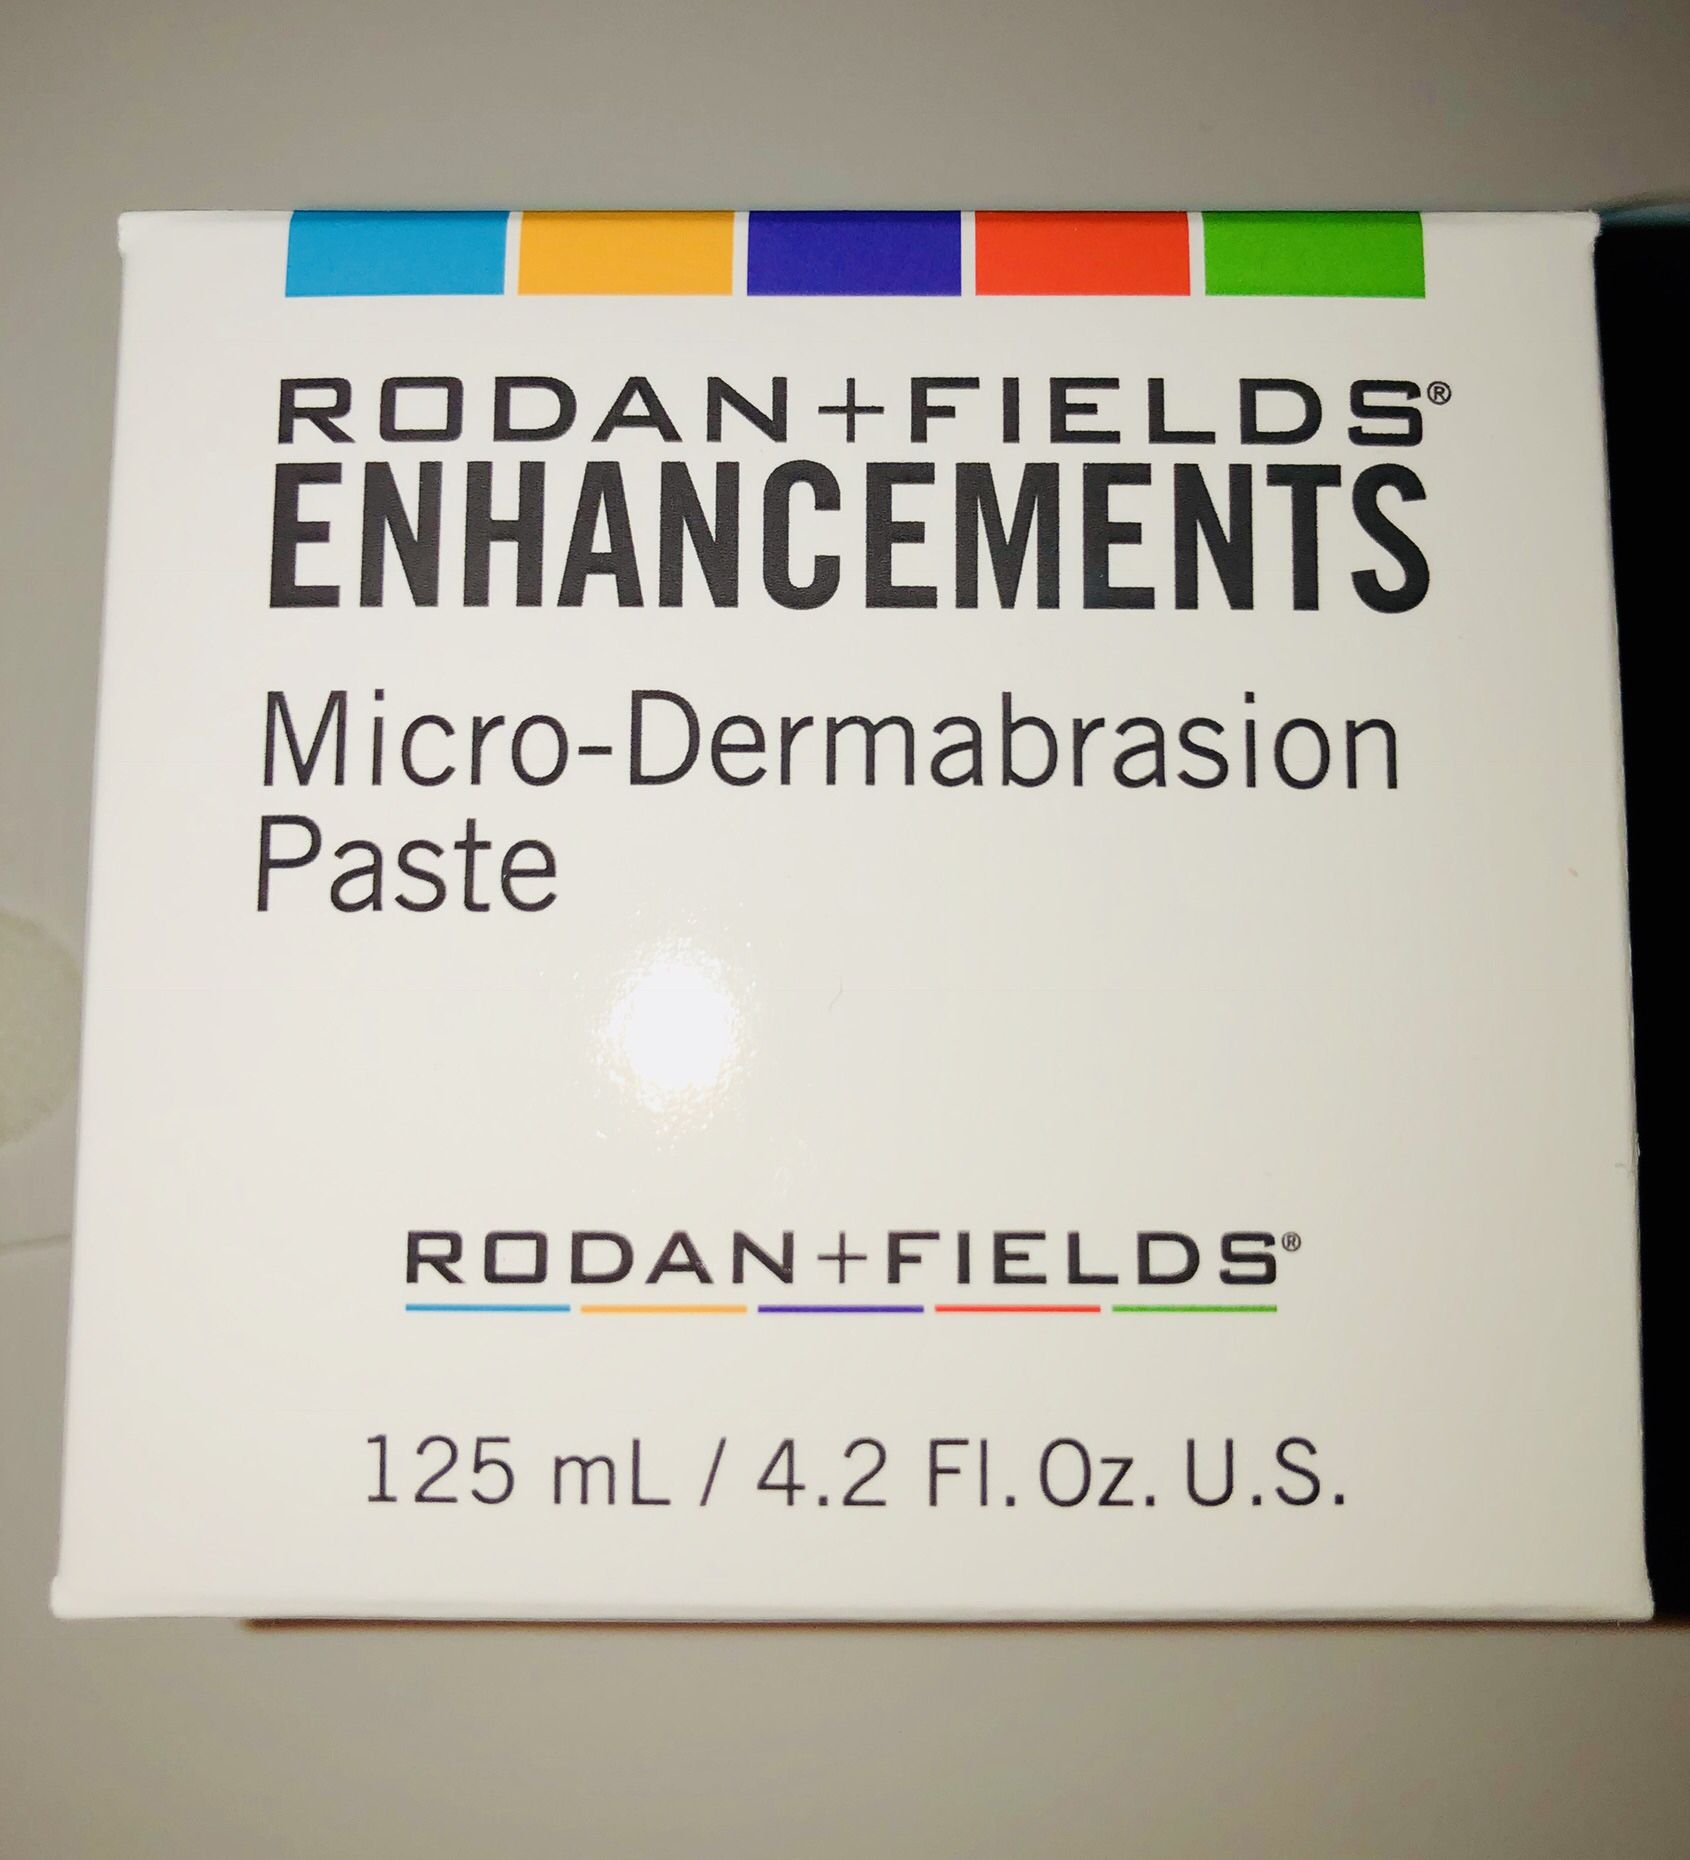 Microdermabrasion Paste from Rodan + Fields